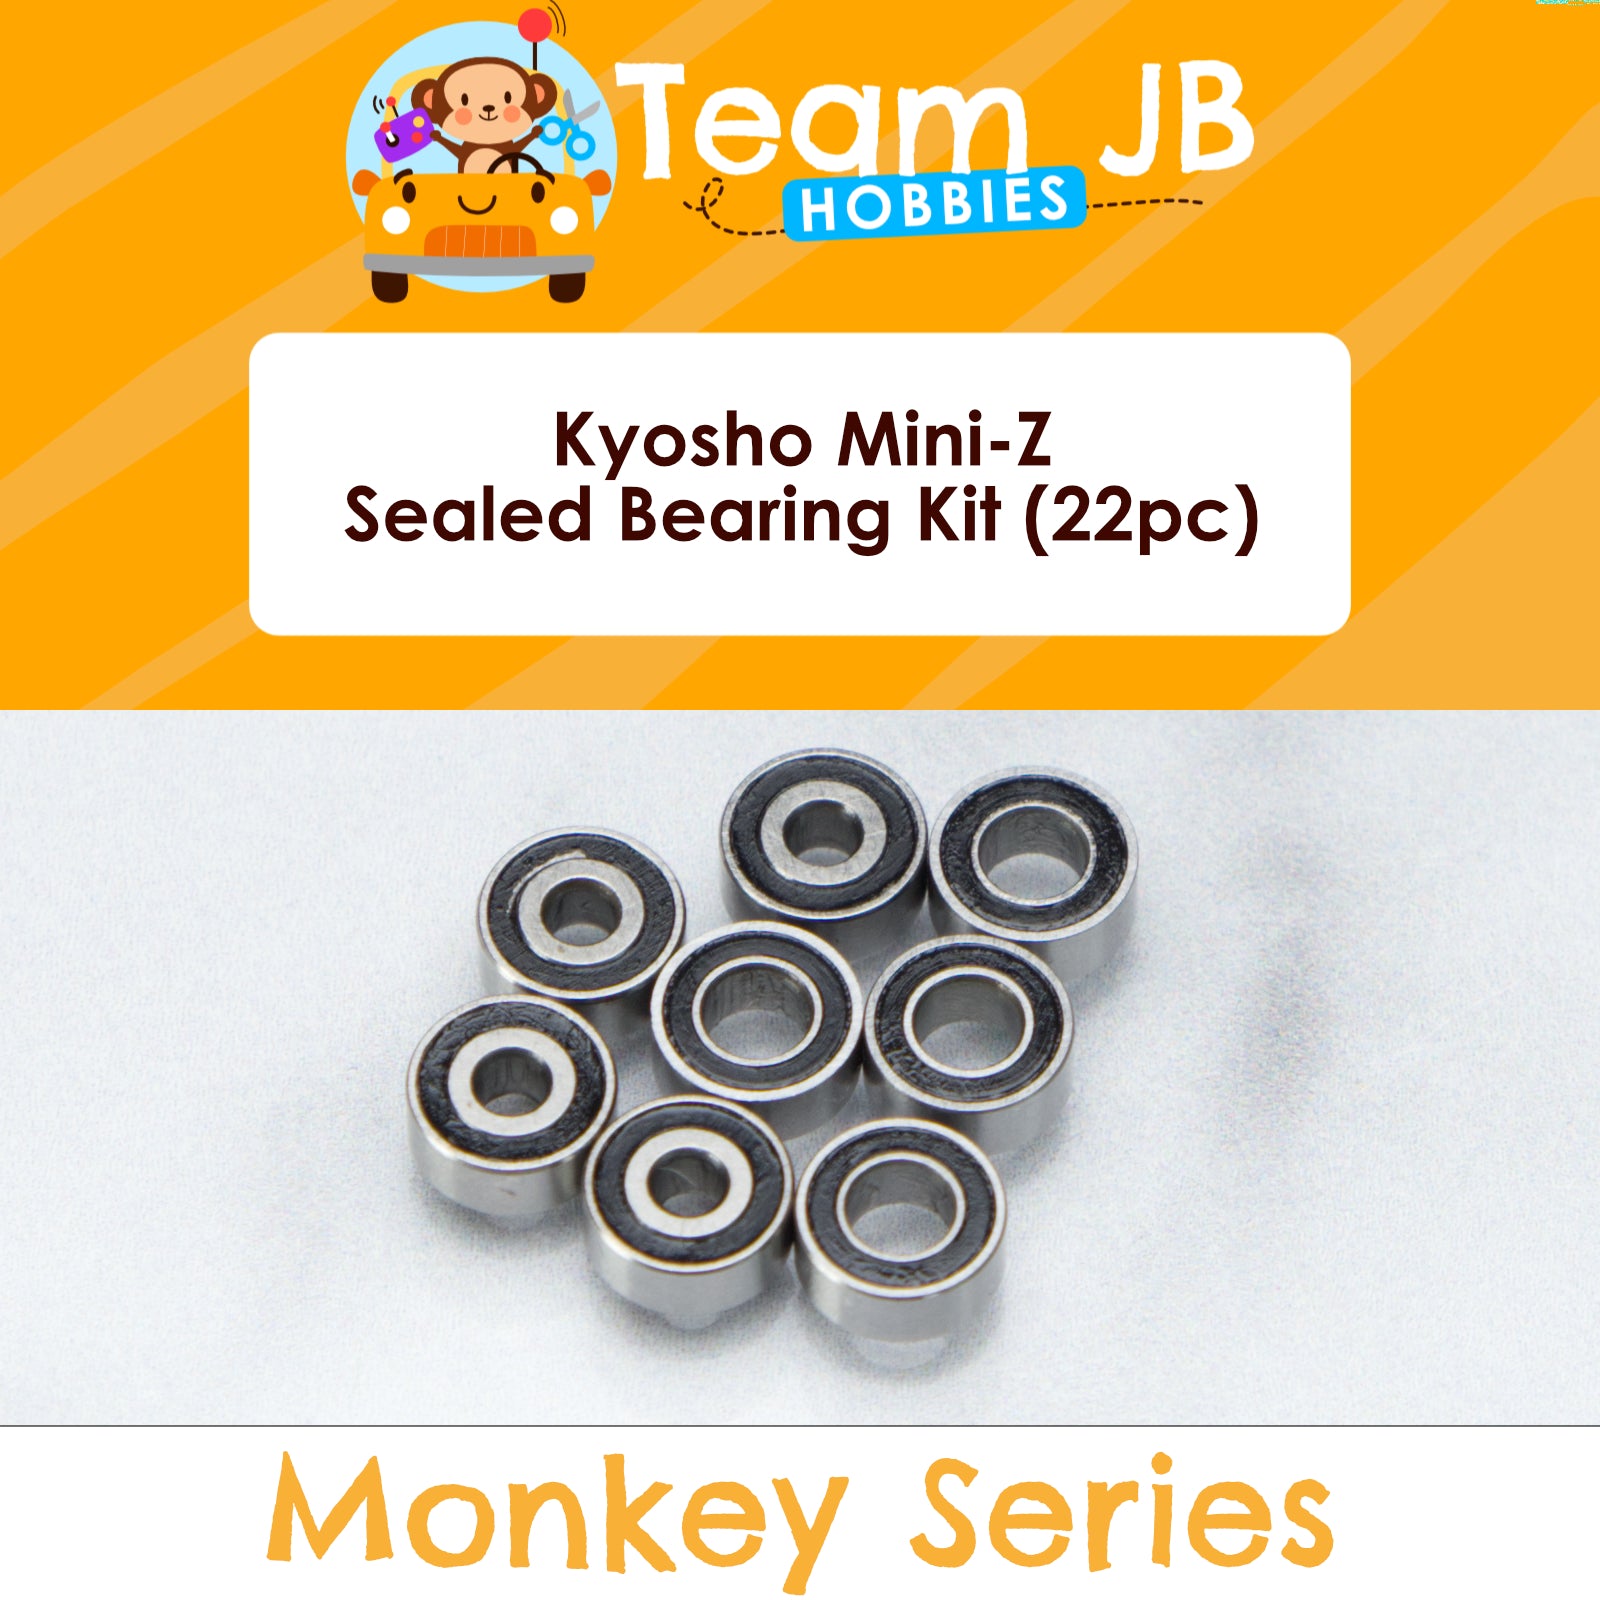 Kyosho Mini-Z - Sealed Bearing Kit